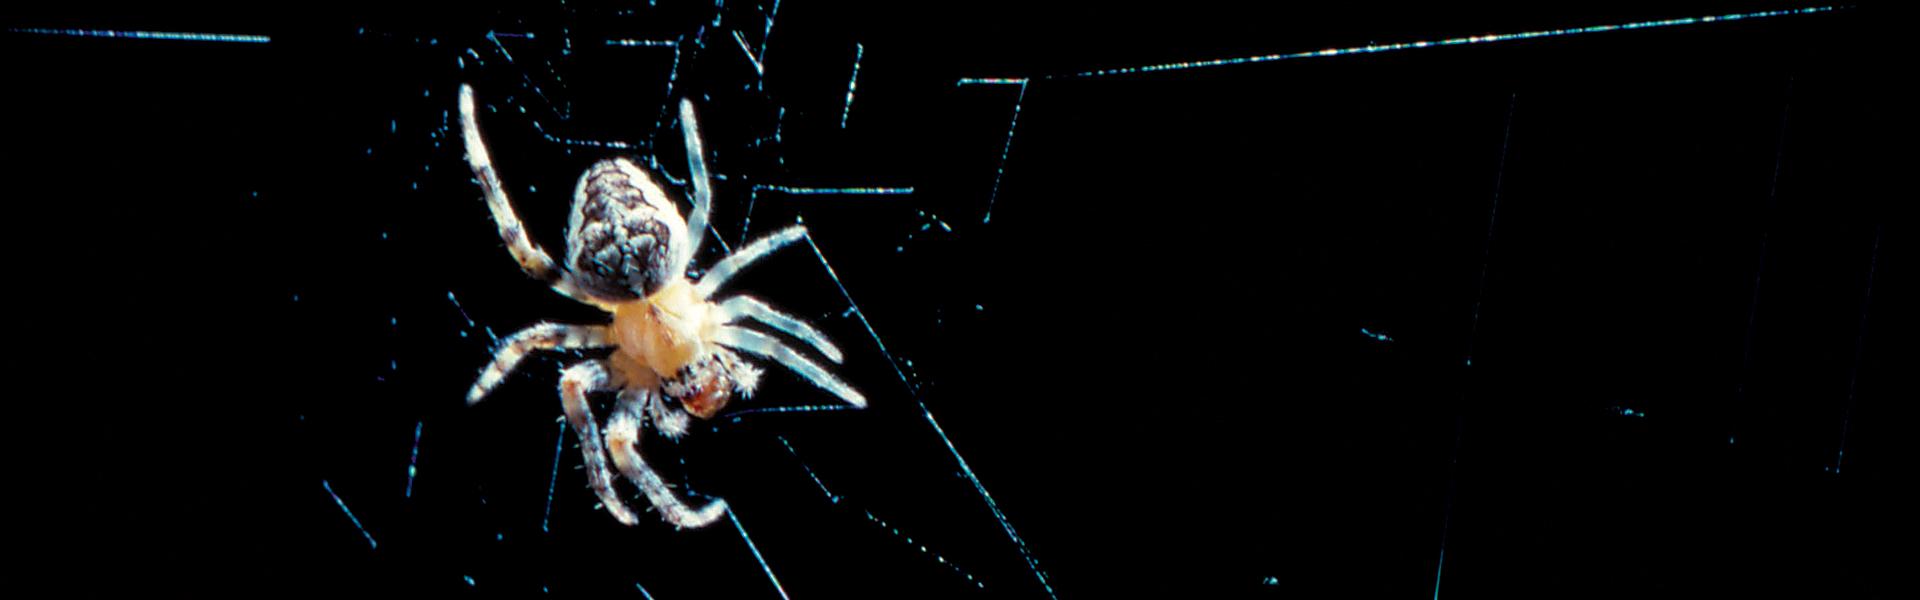 The autonomous legs of arachnids